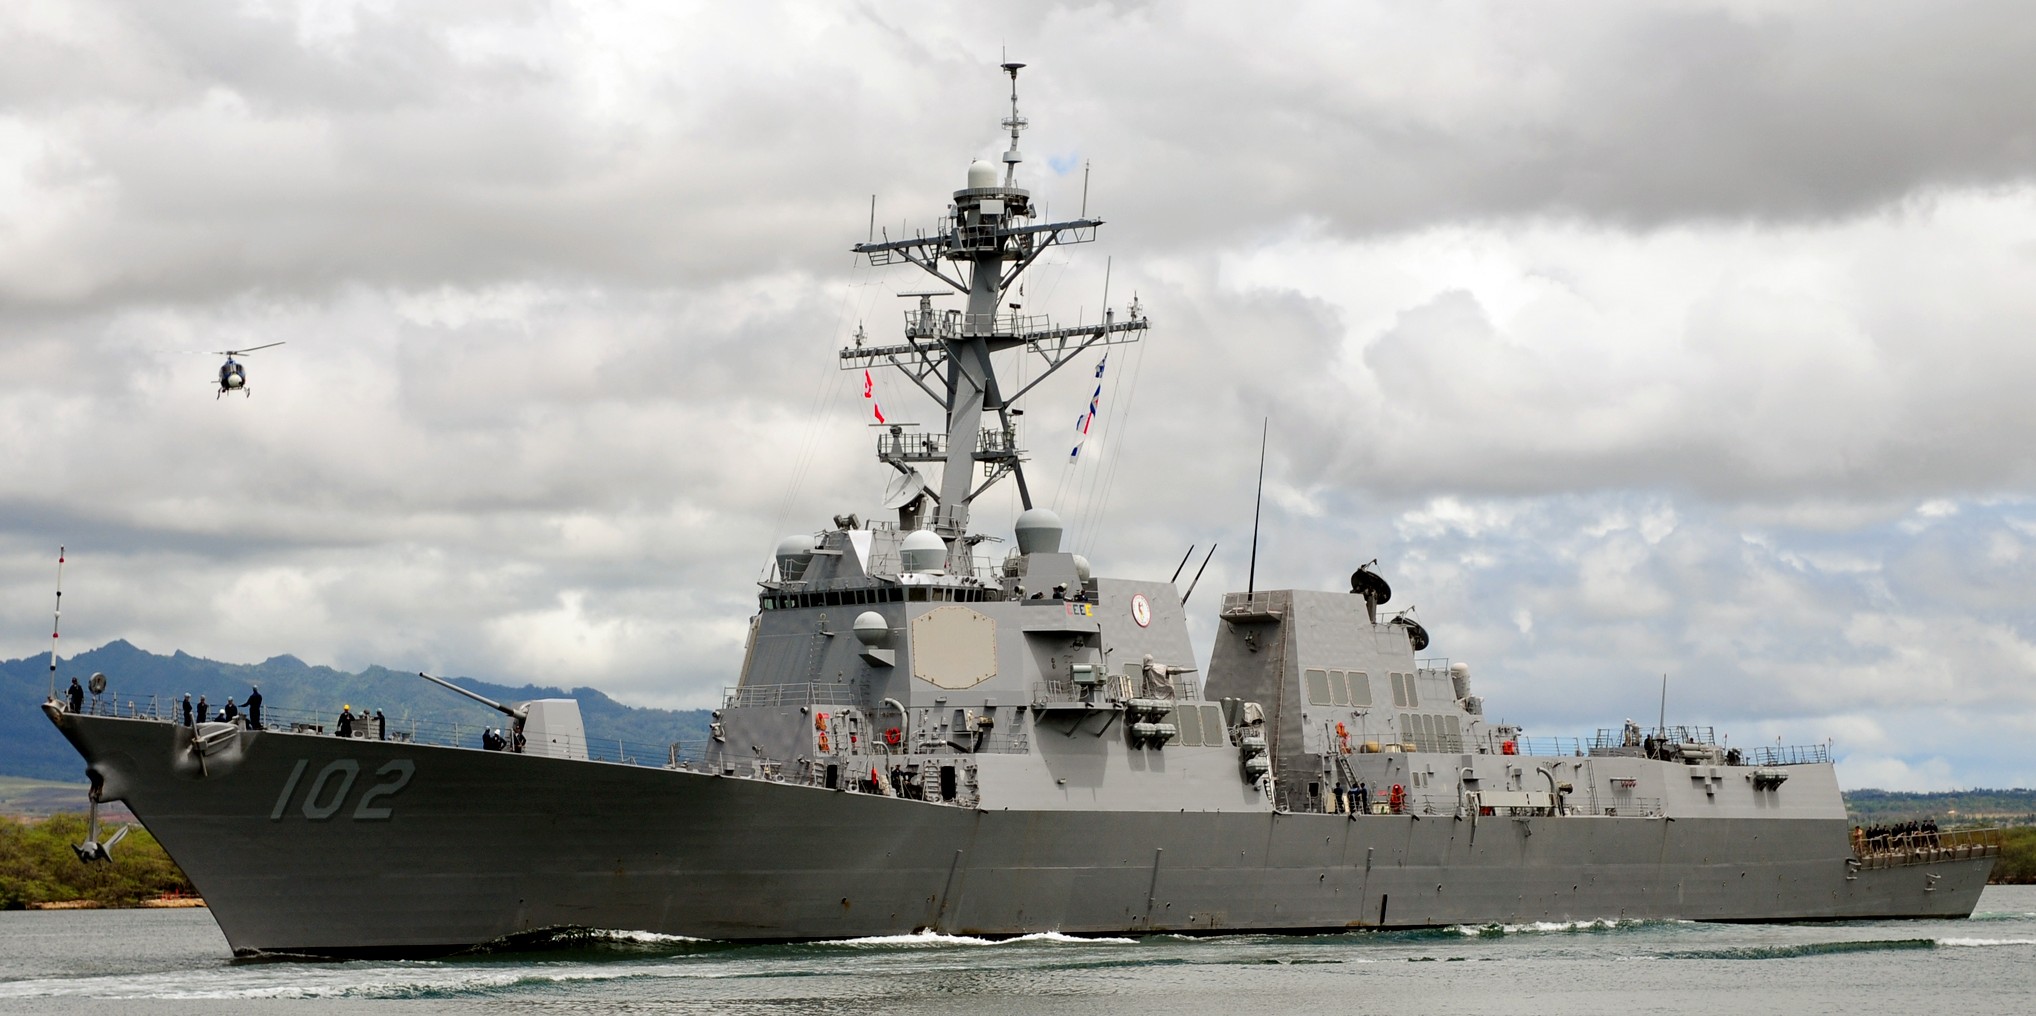 ddg-102 uss sampson arleigh burke class guided missile destroyer aegis us navy pearl harbor hawaii 32